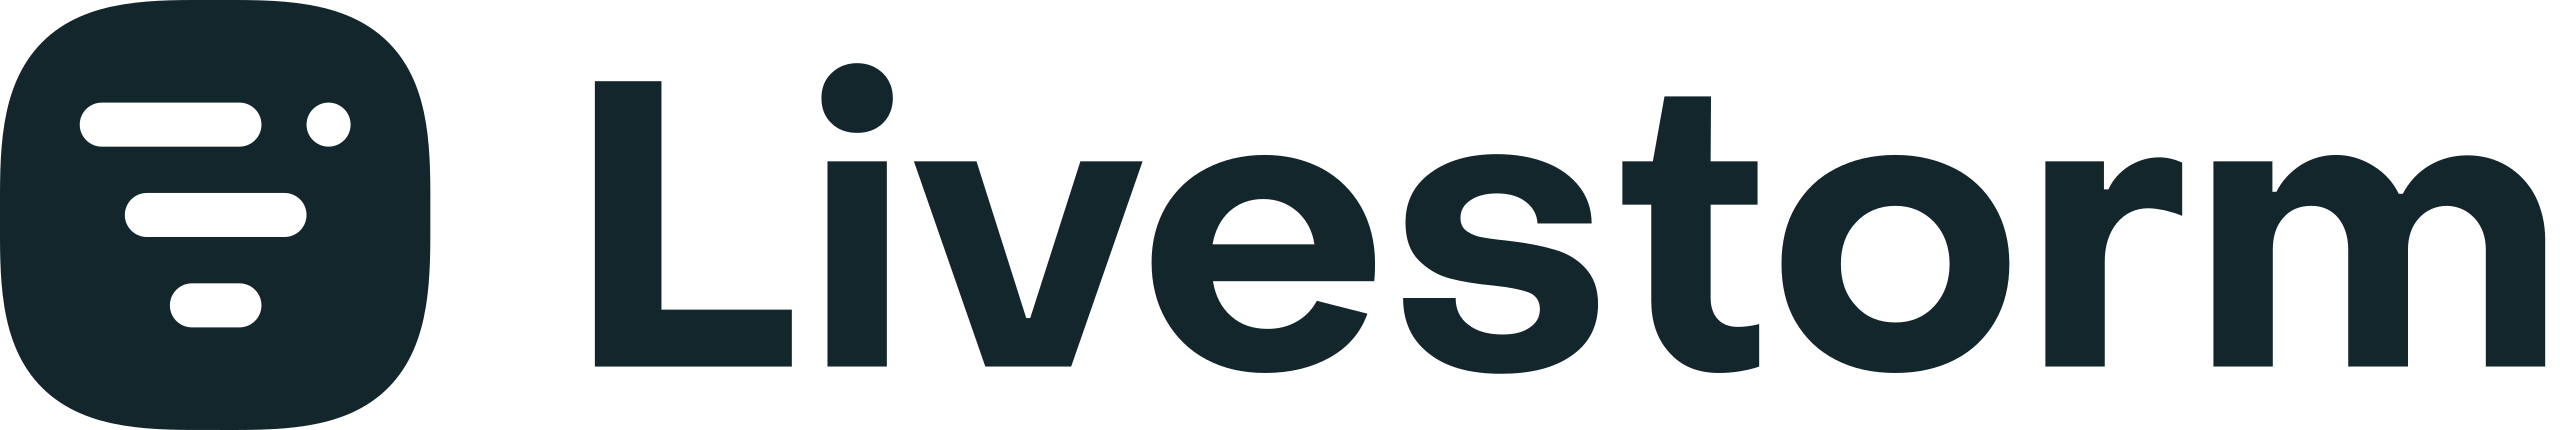 Livestorm Logo